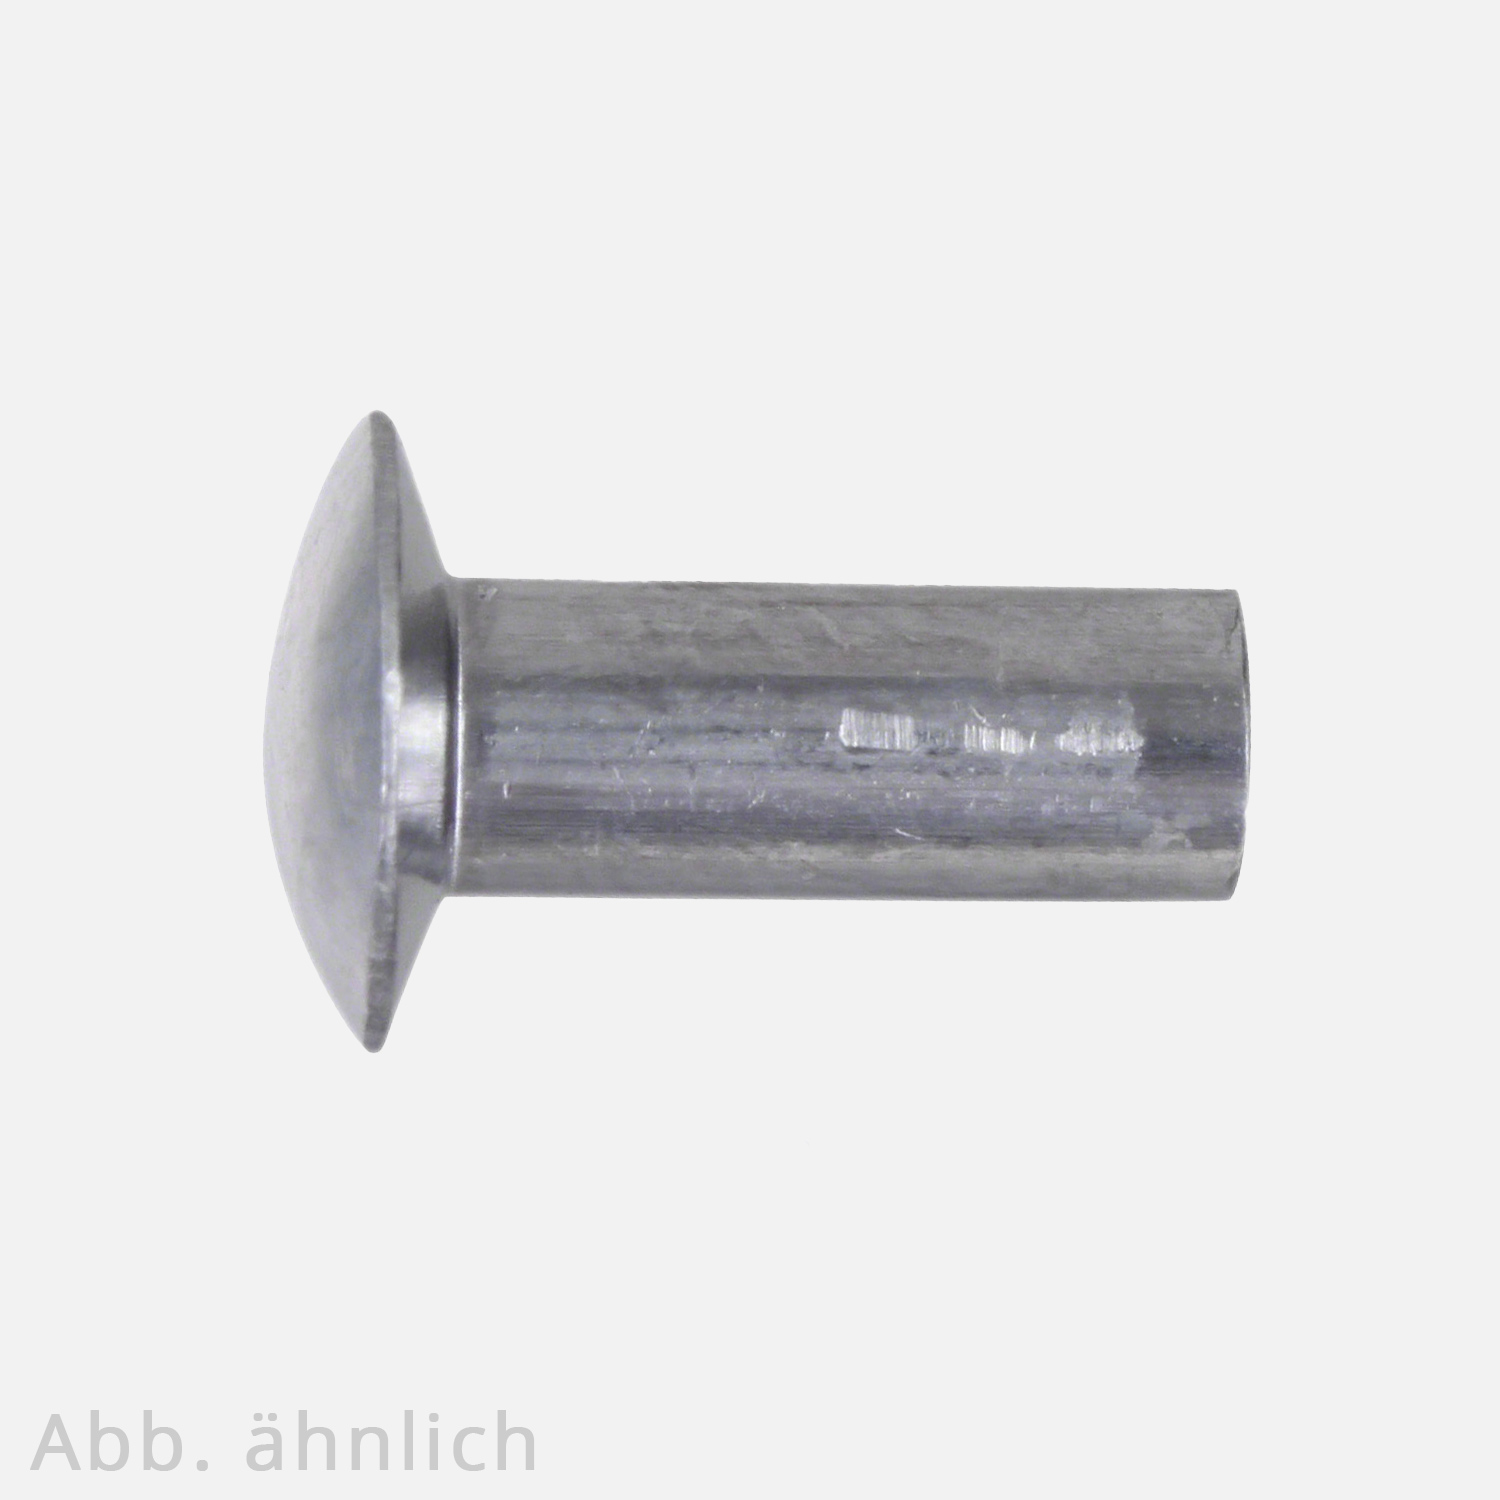 500 Linsennieten 5x12 mm - DIN 662 - Aluminium 99.5